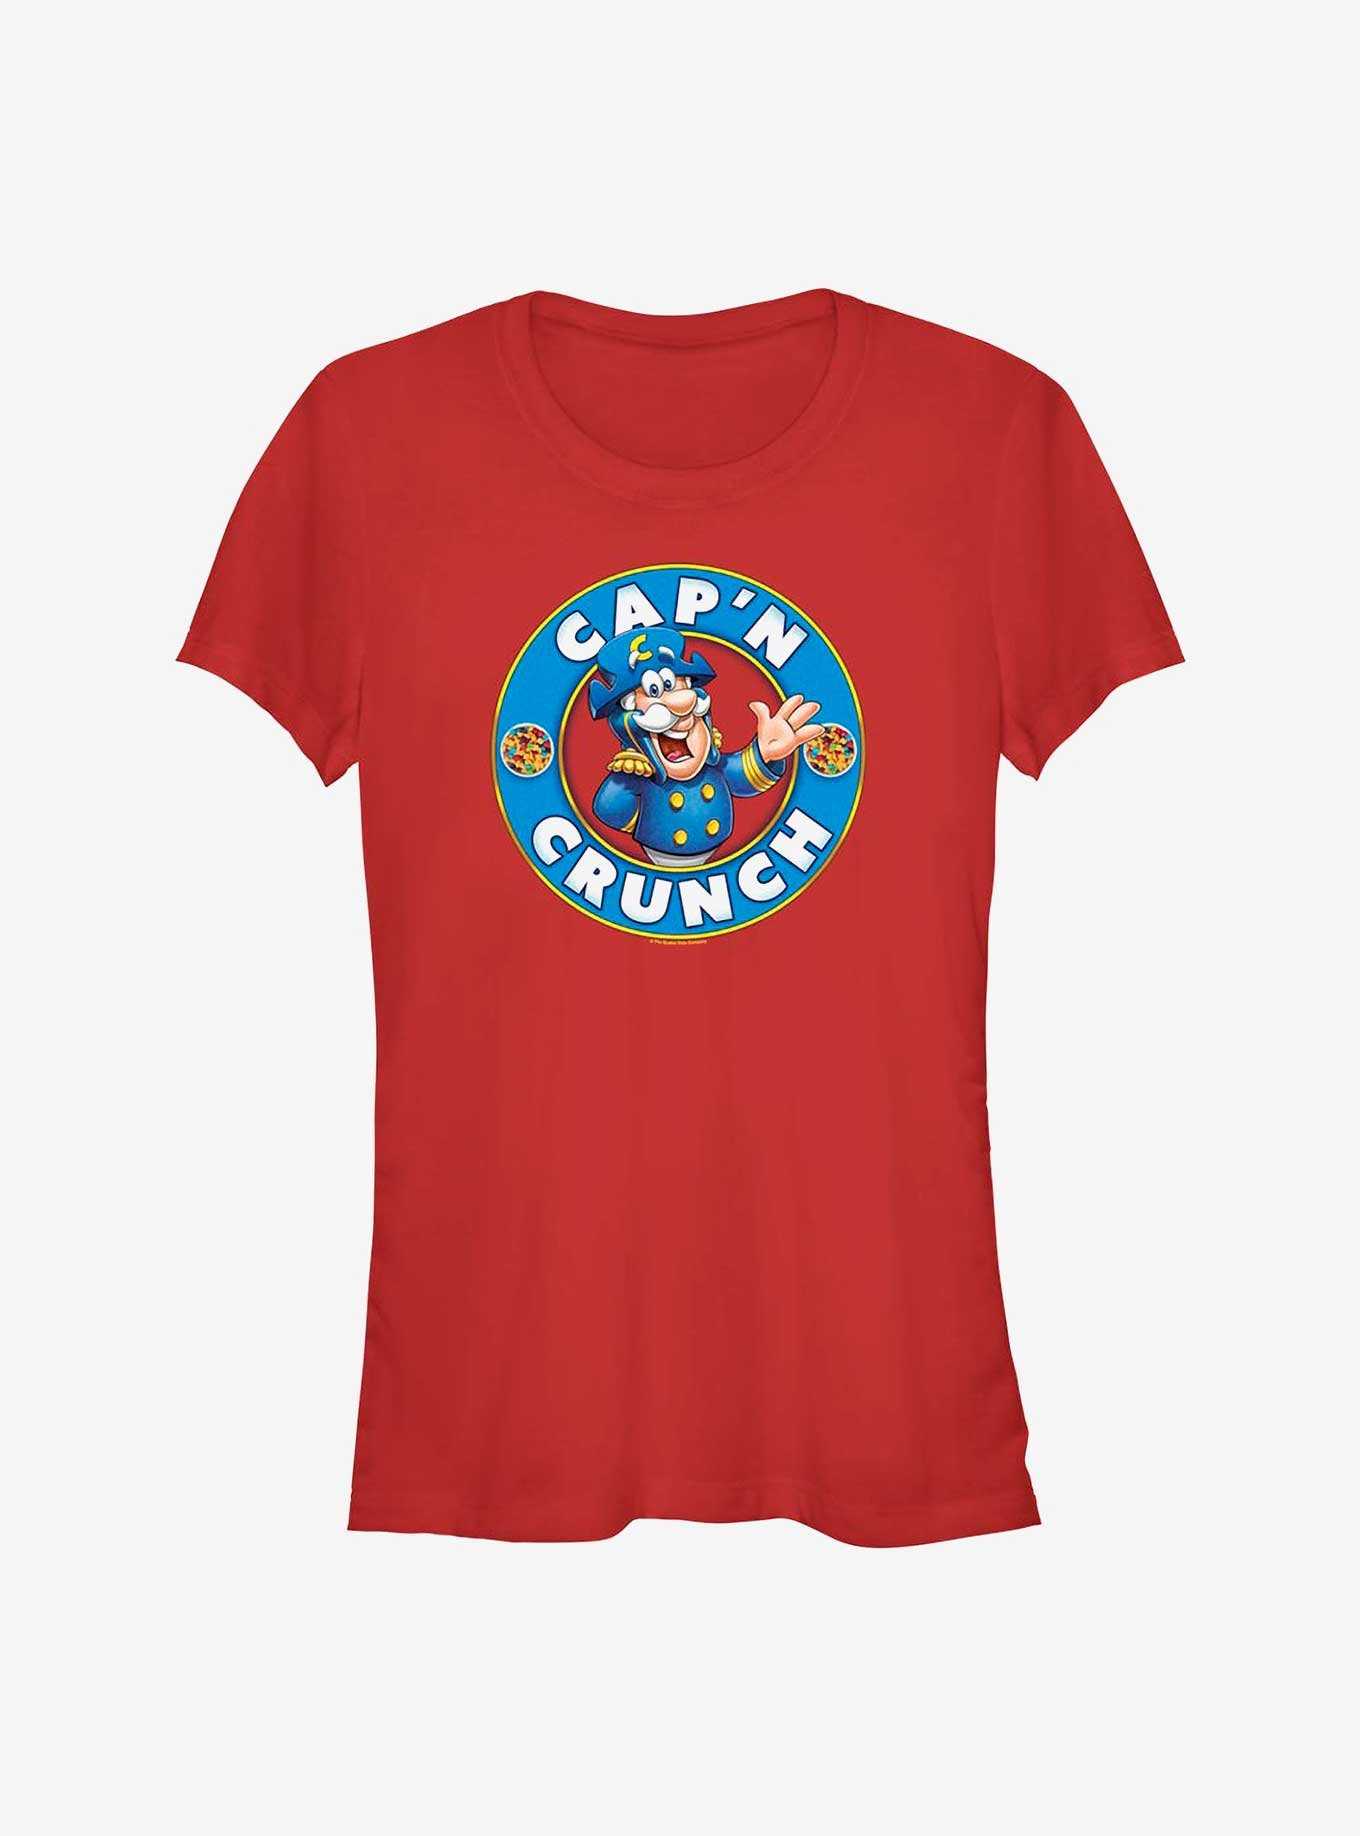 Capn Crunch Stamp Girls T-Shirt, , hi-res